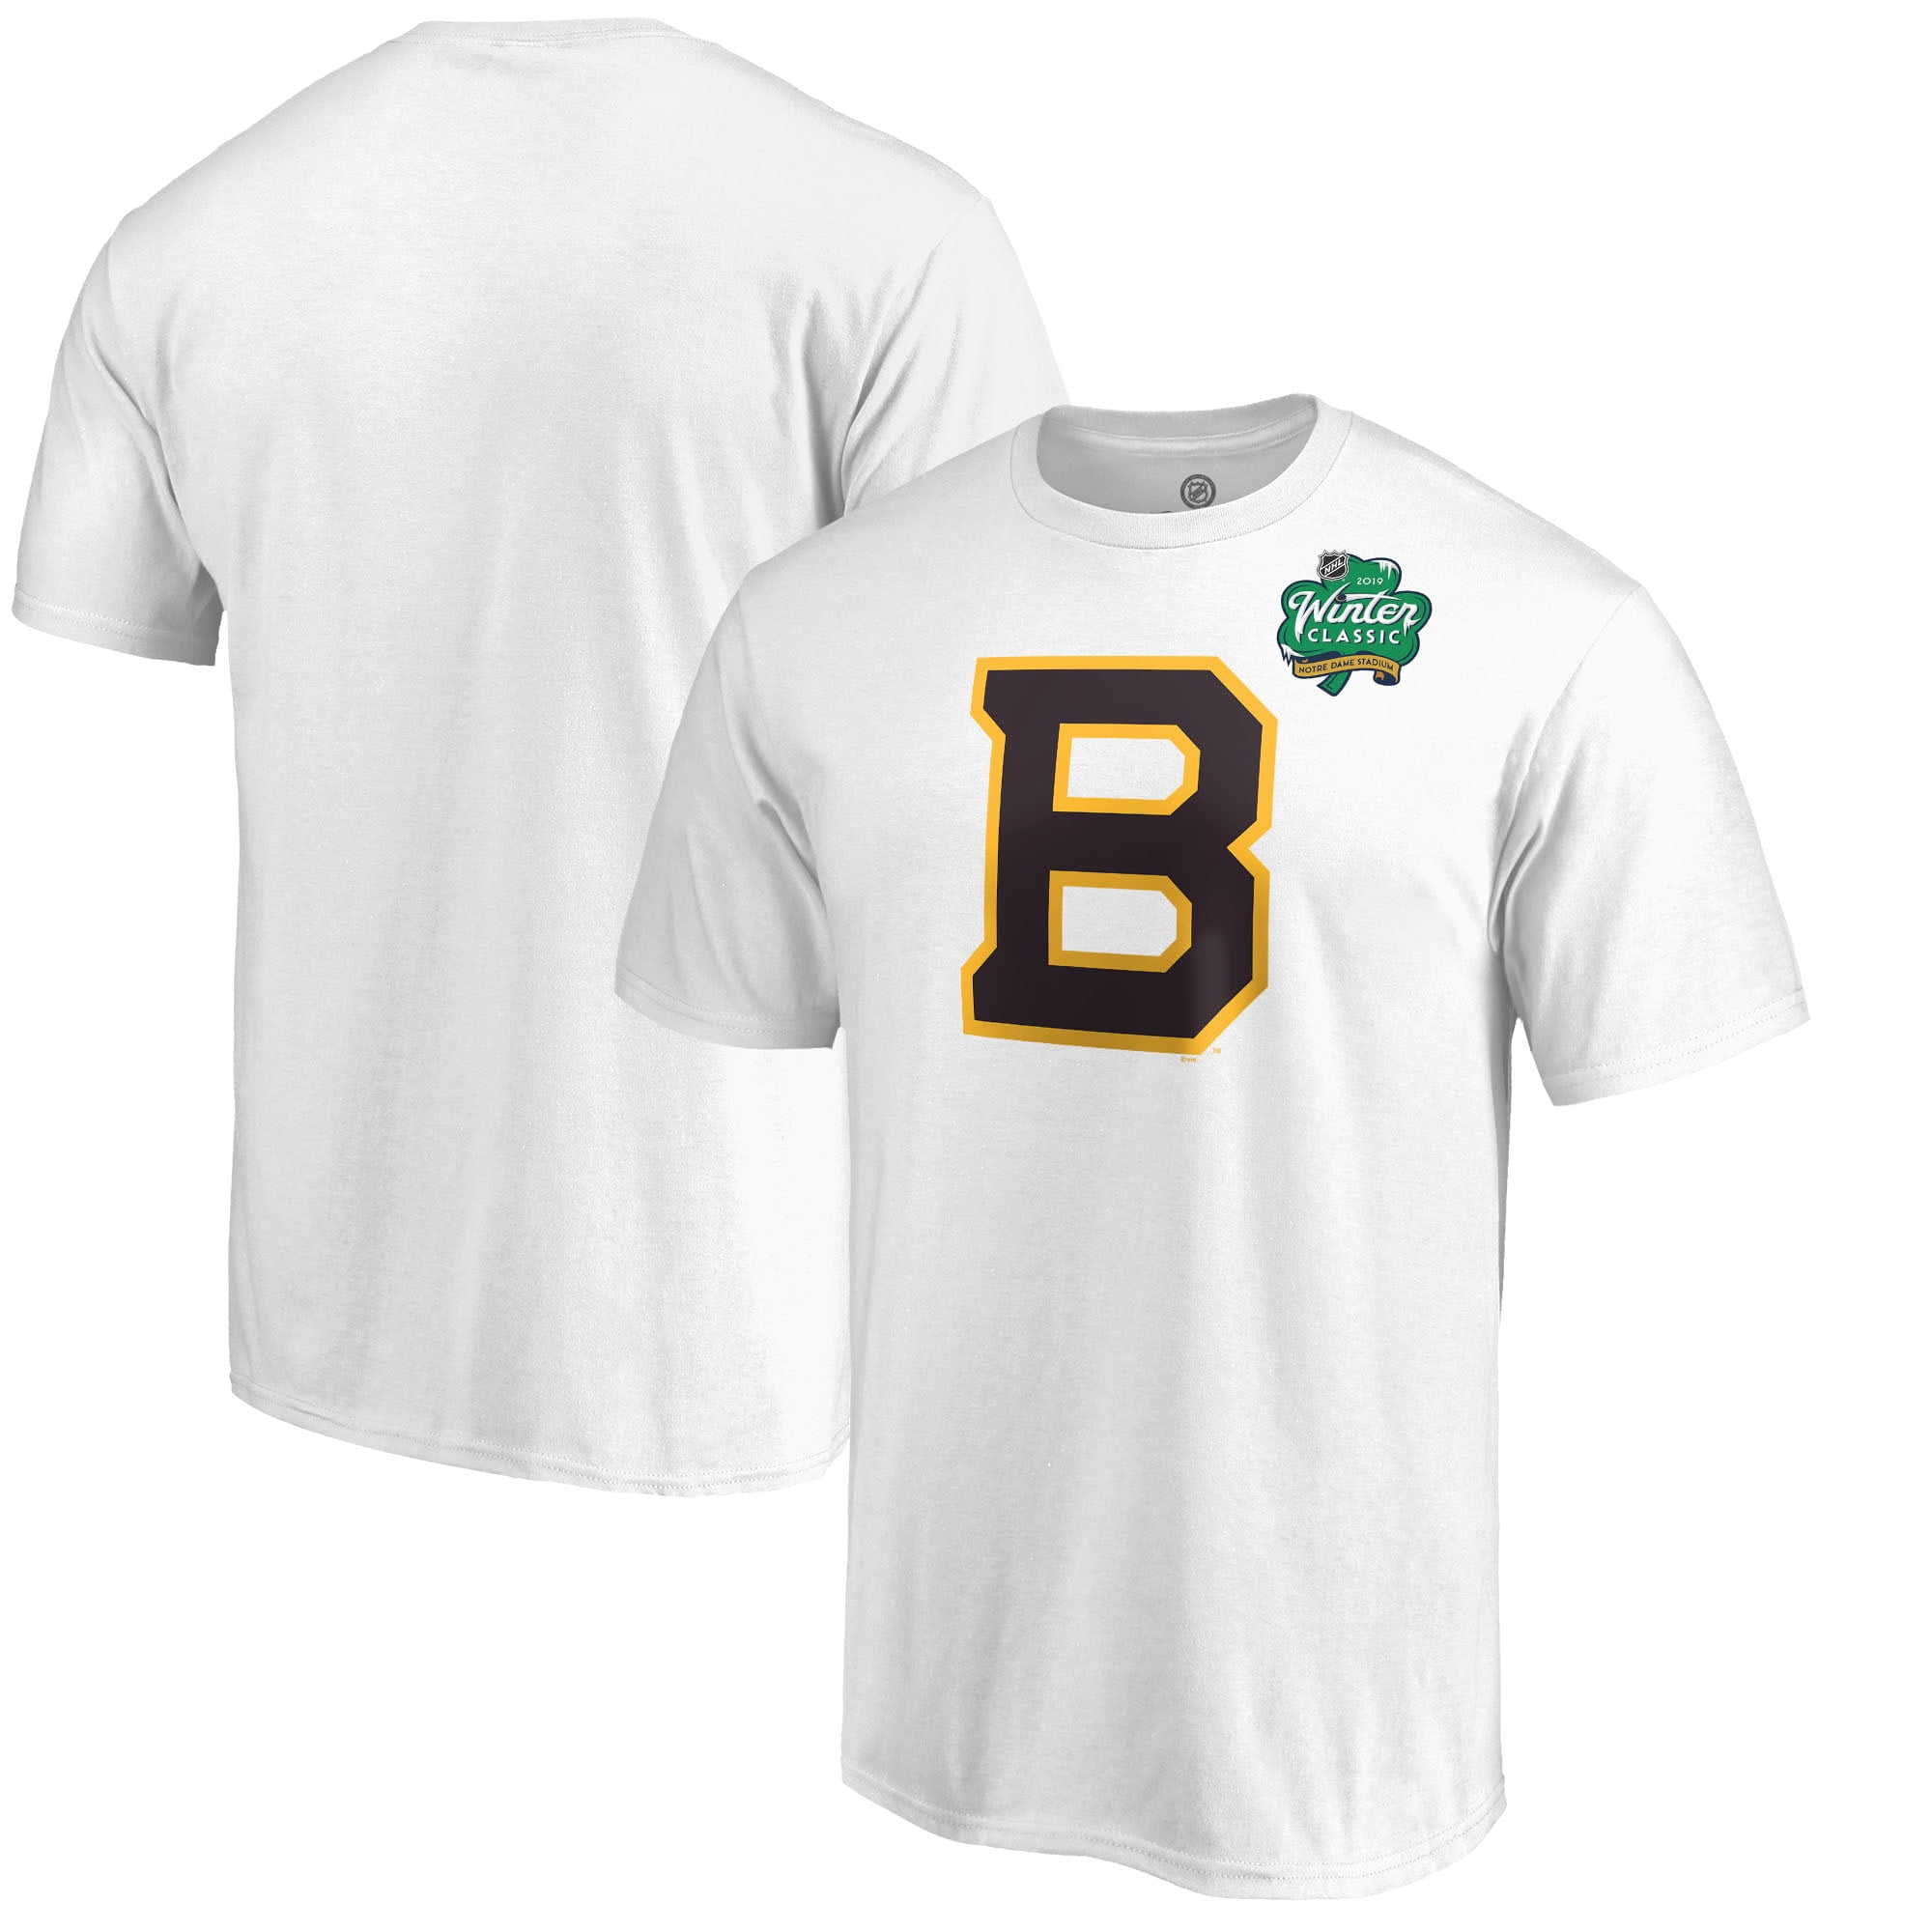 Men's Fanatics Branded White Boston Bruins 2019 NHL Winter Classic Primary Logo T-Shirt